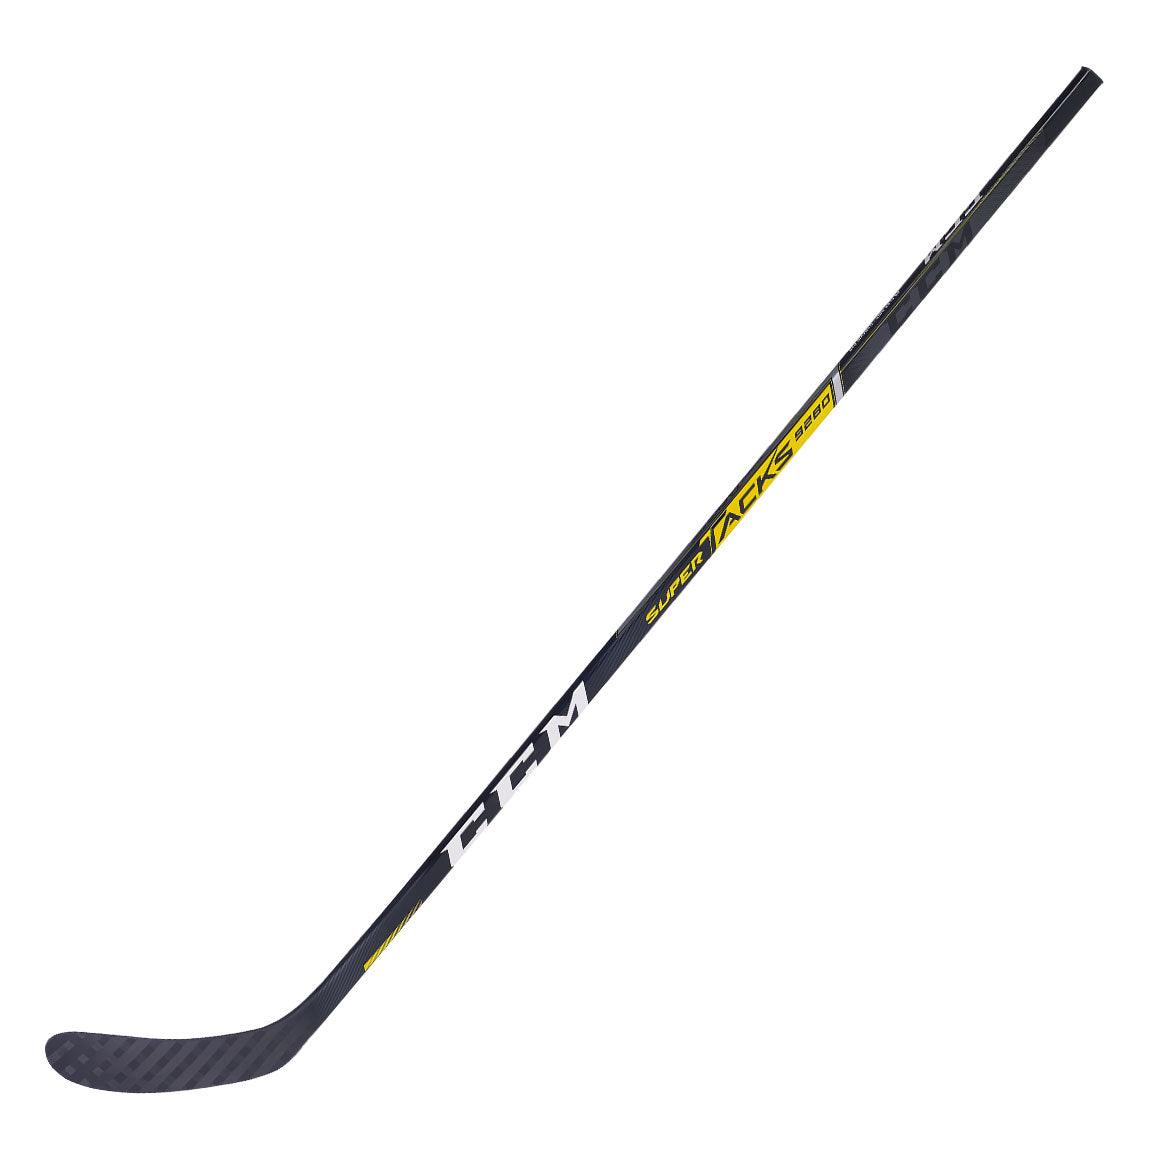 Super Tacks 9280 Hockey Stick - Senior - Sports Excellence